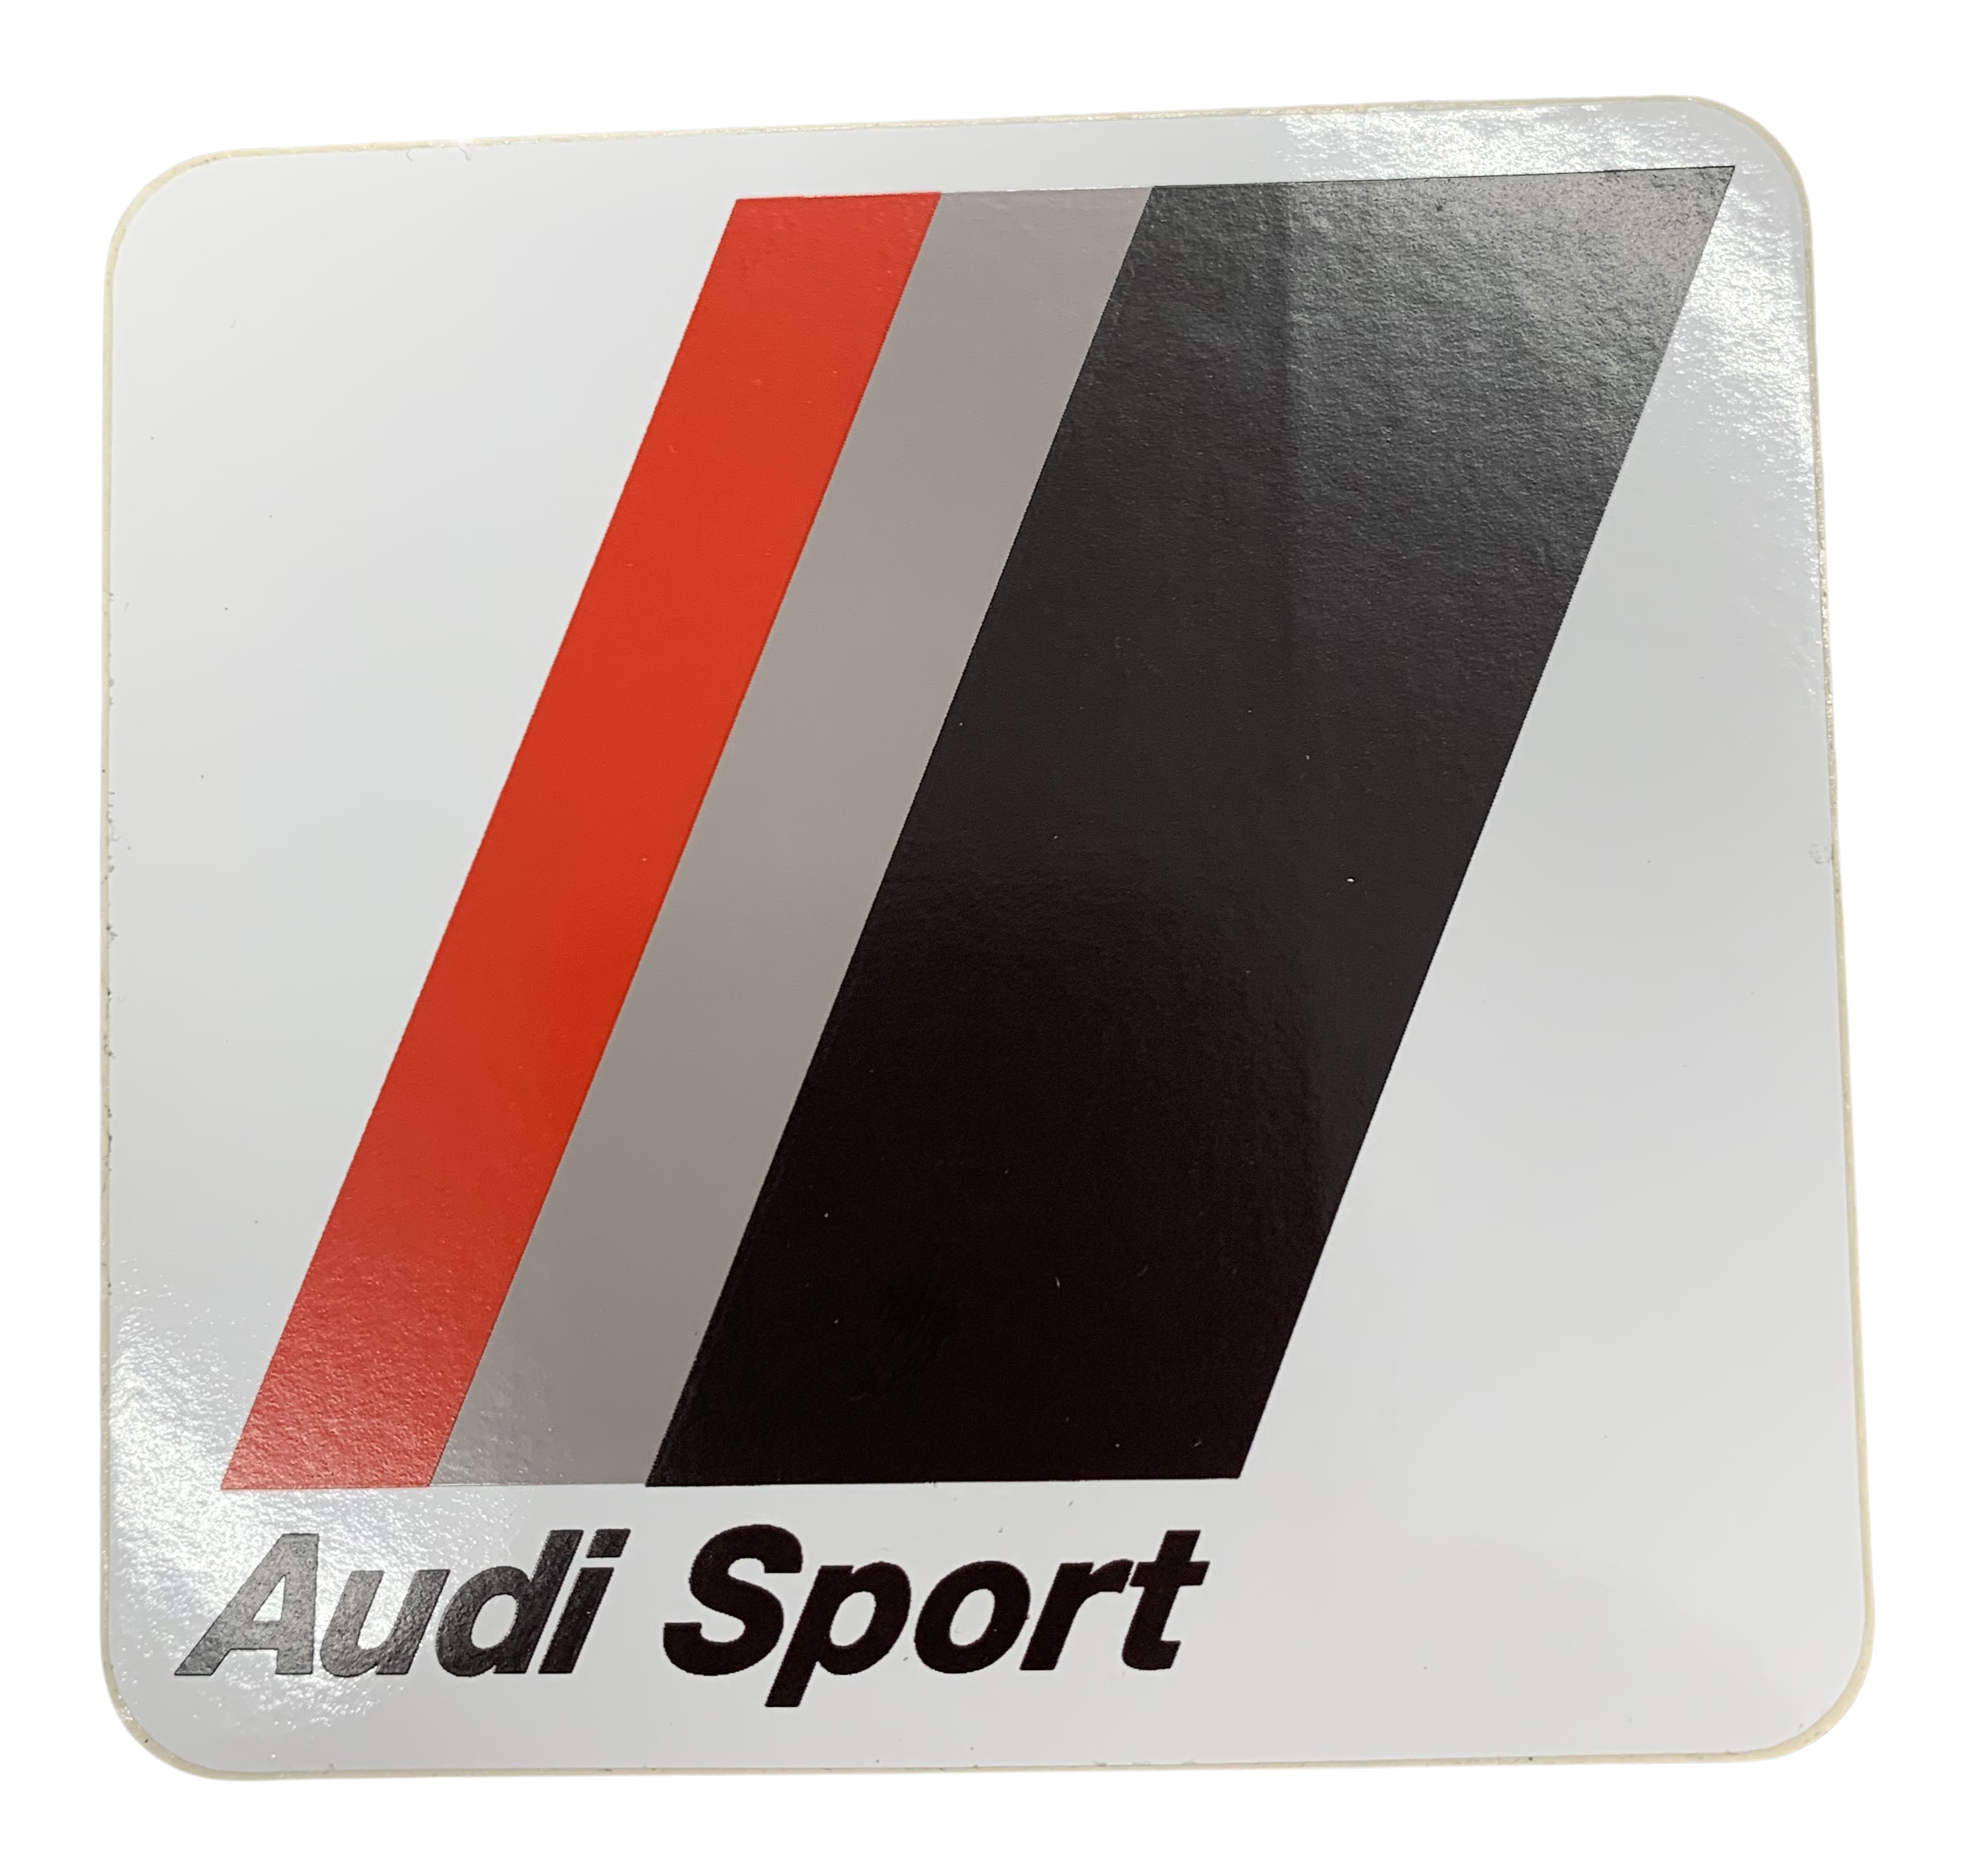 Original Audi Sport Sticker 10x10cm Adhesive